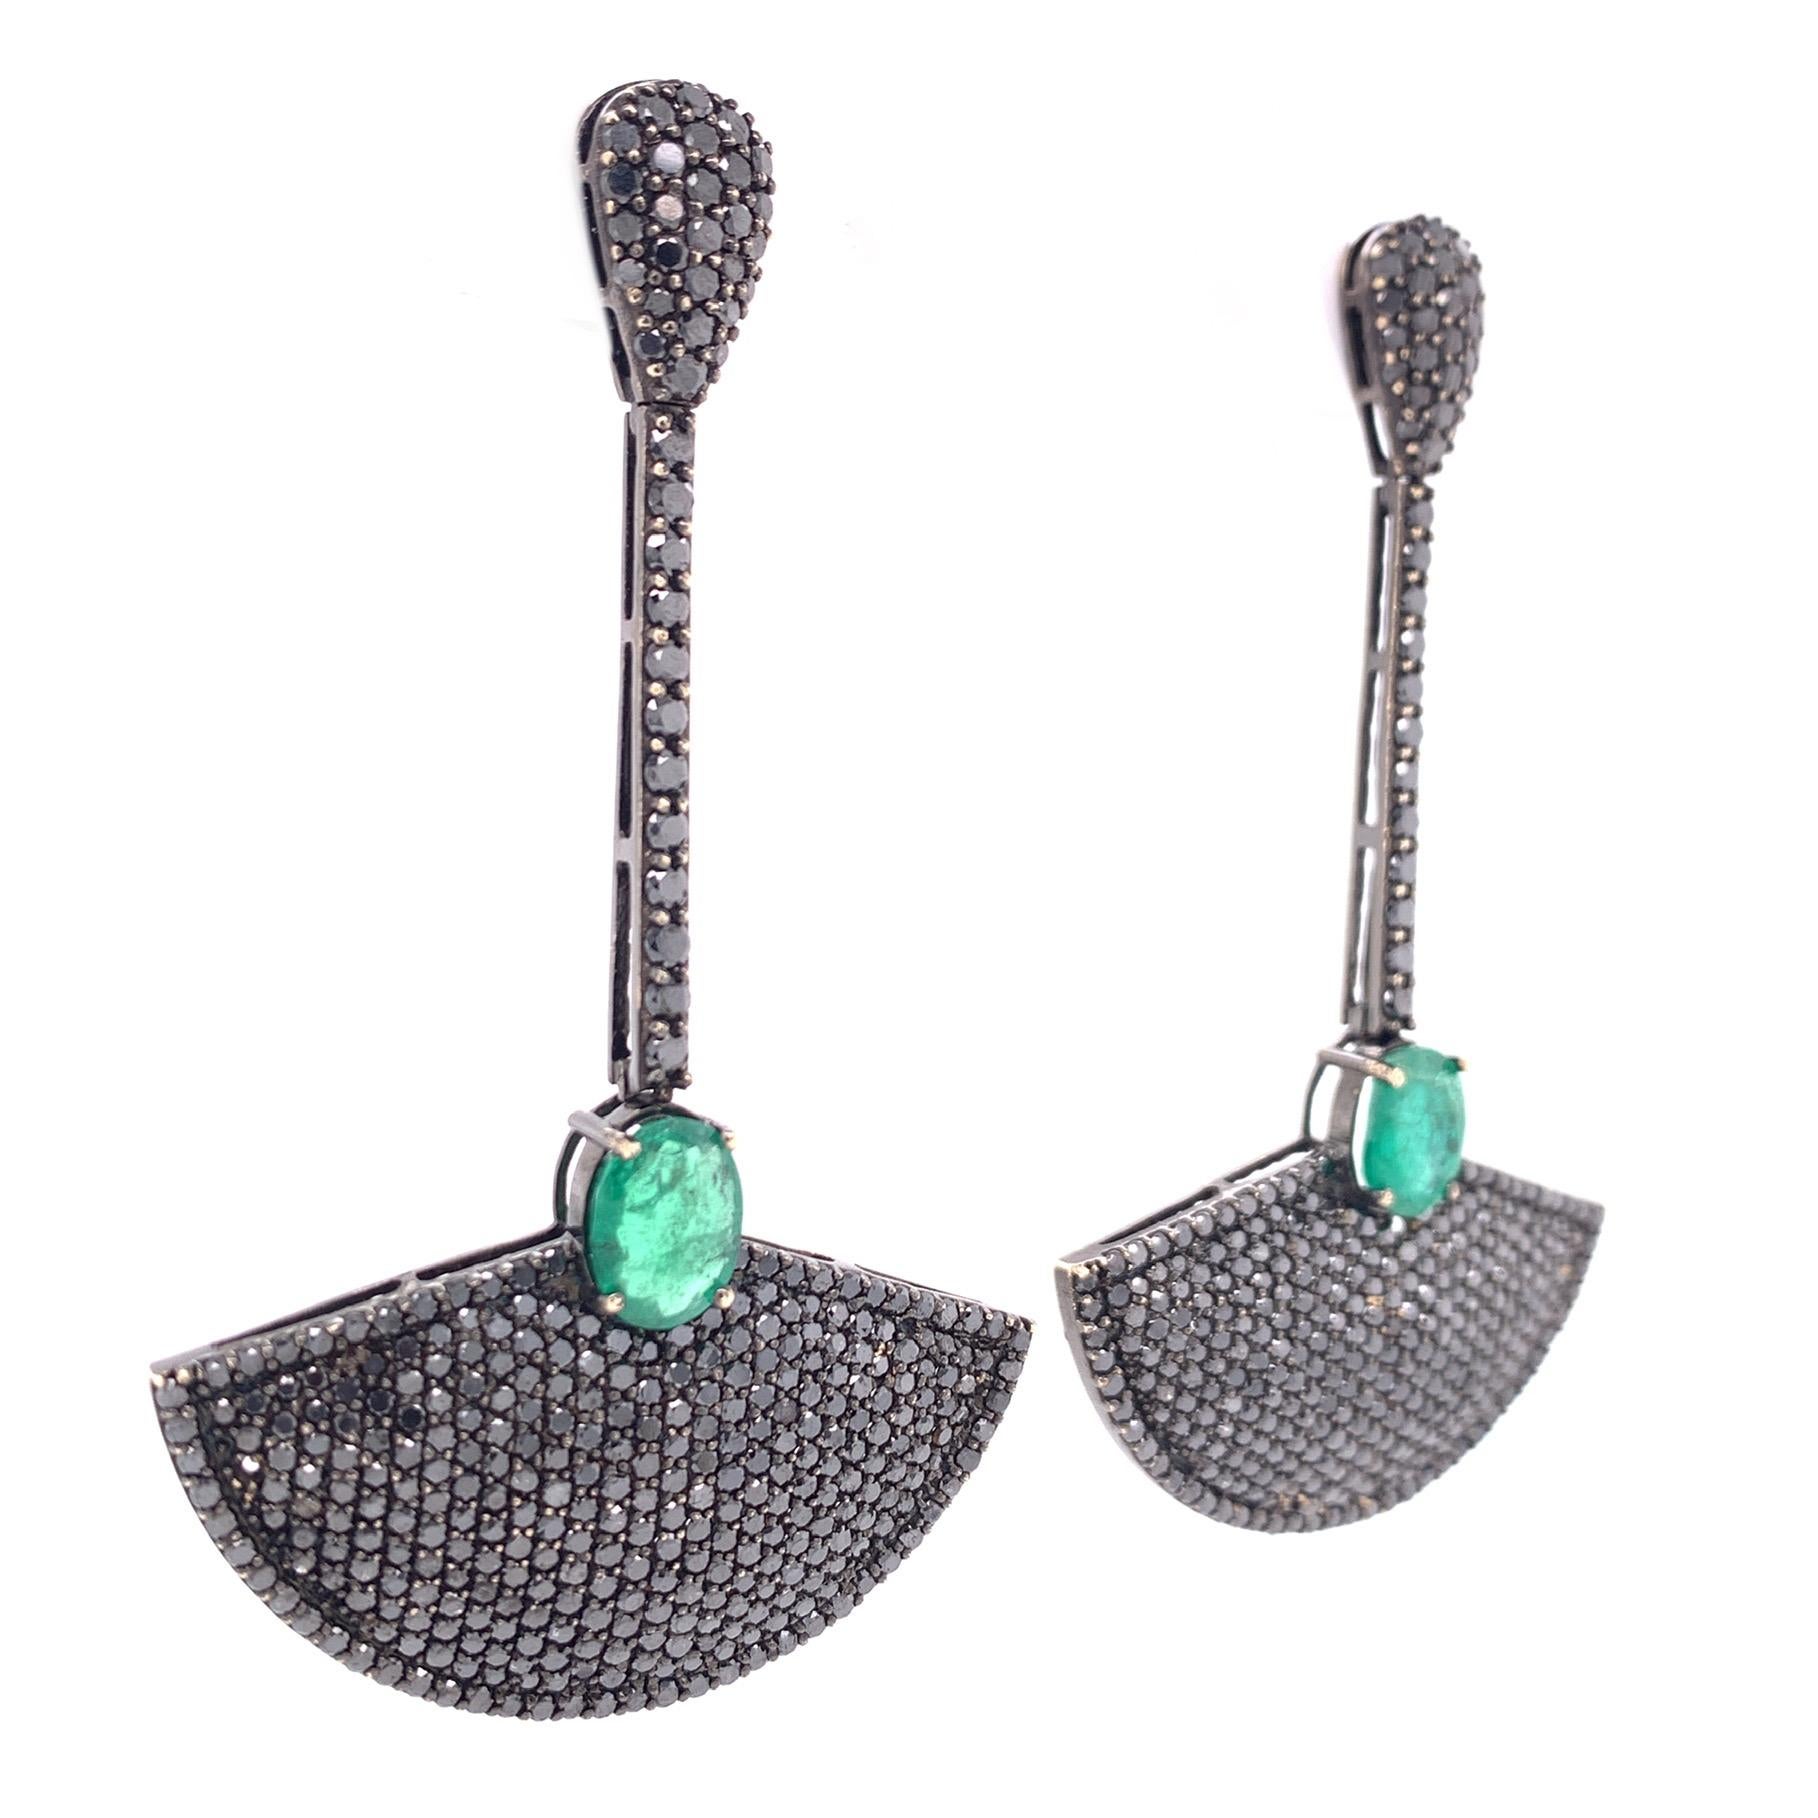 18K Tinted Rhodium
Emerald: 2.32ct total weight.
Black Diamonds: 6.14ct total weight.